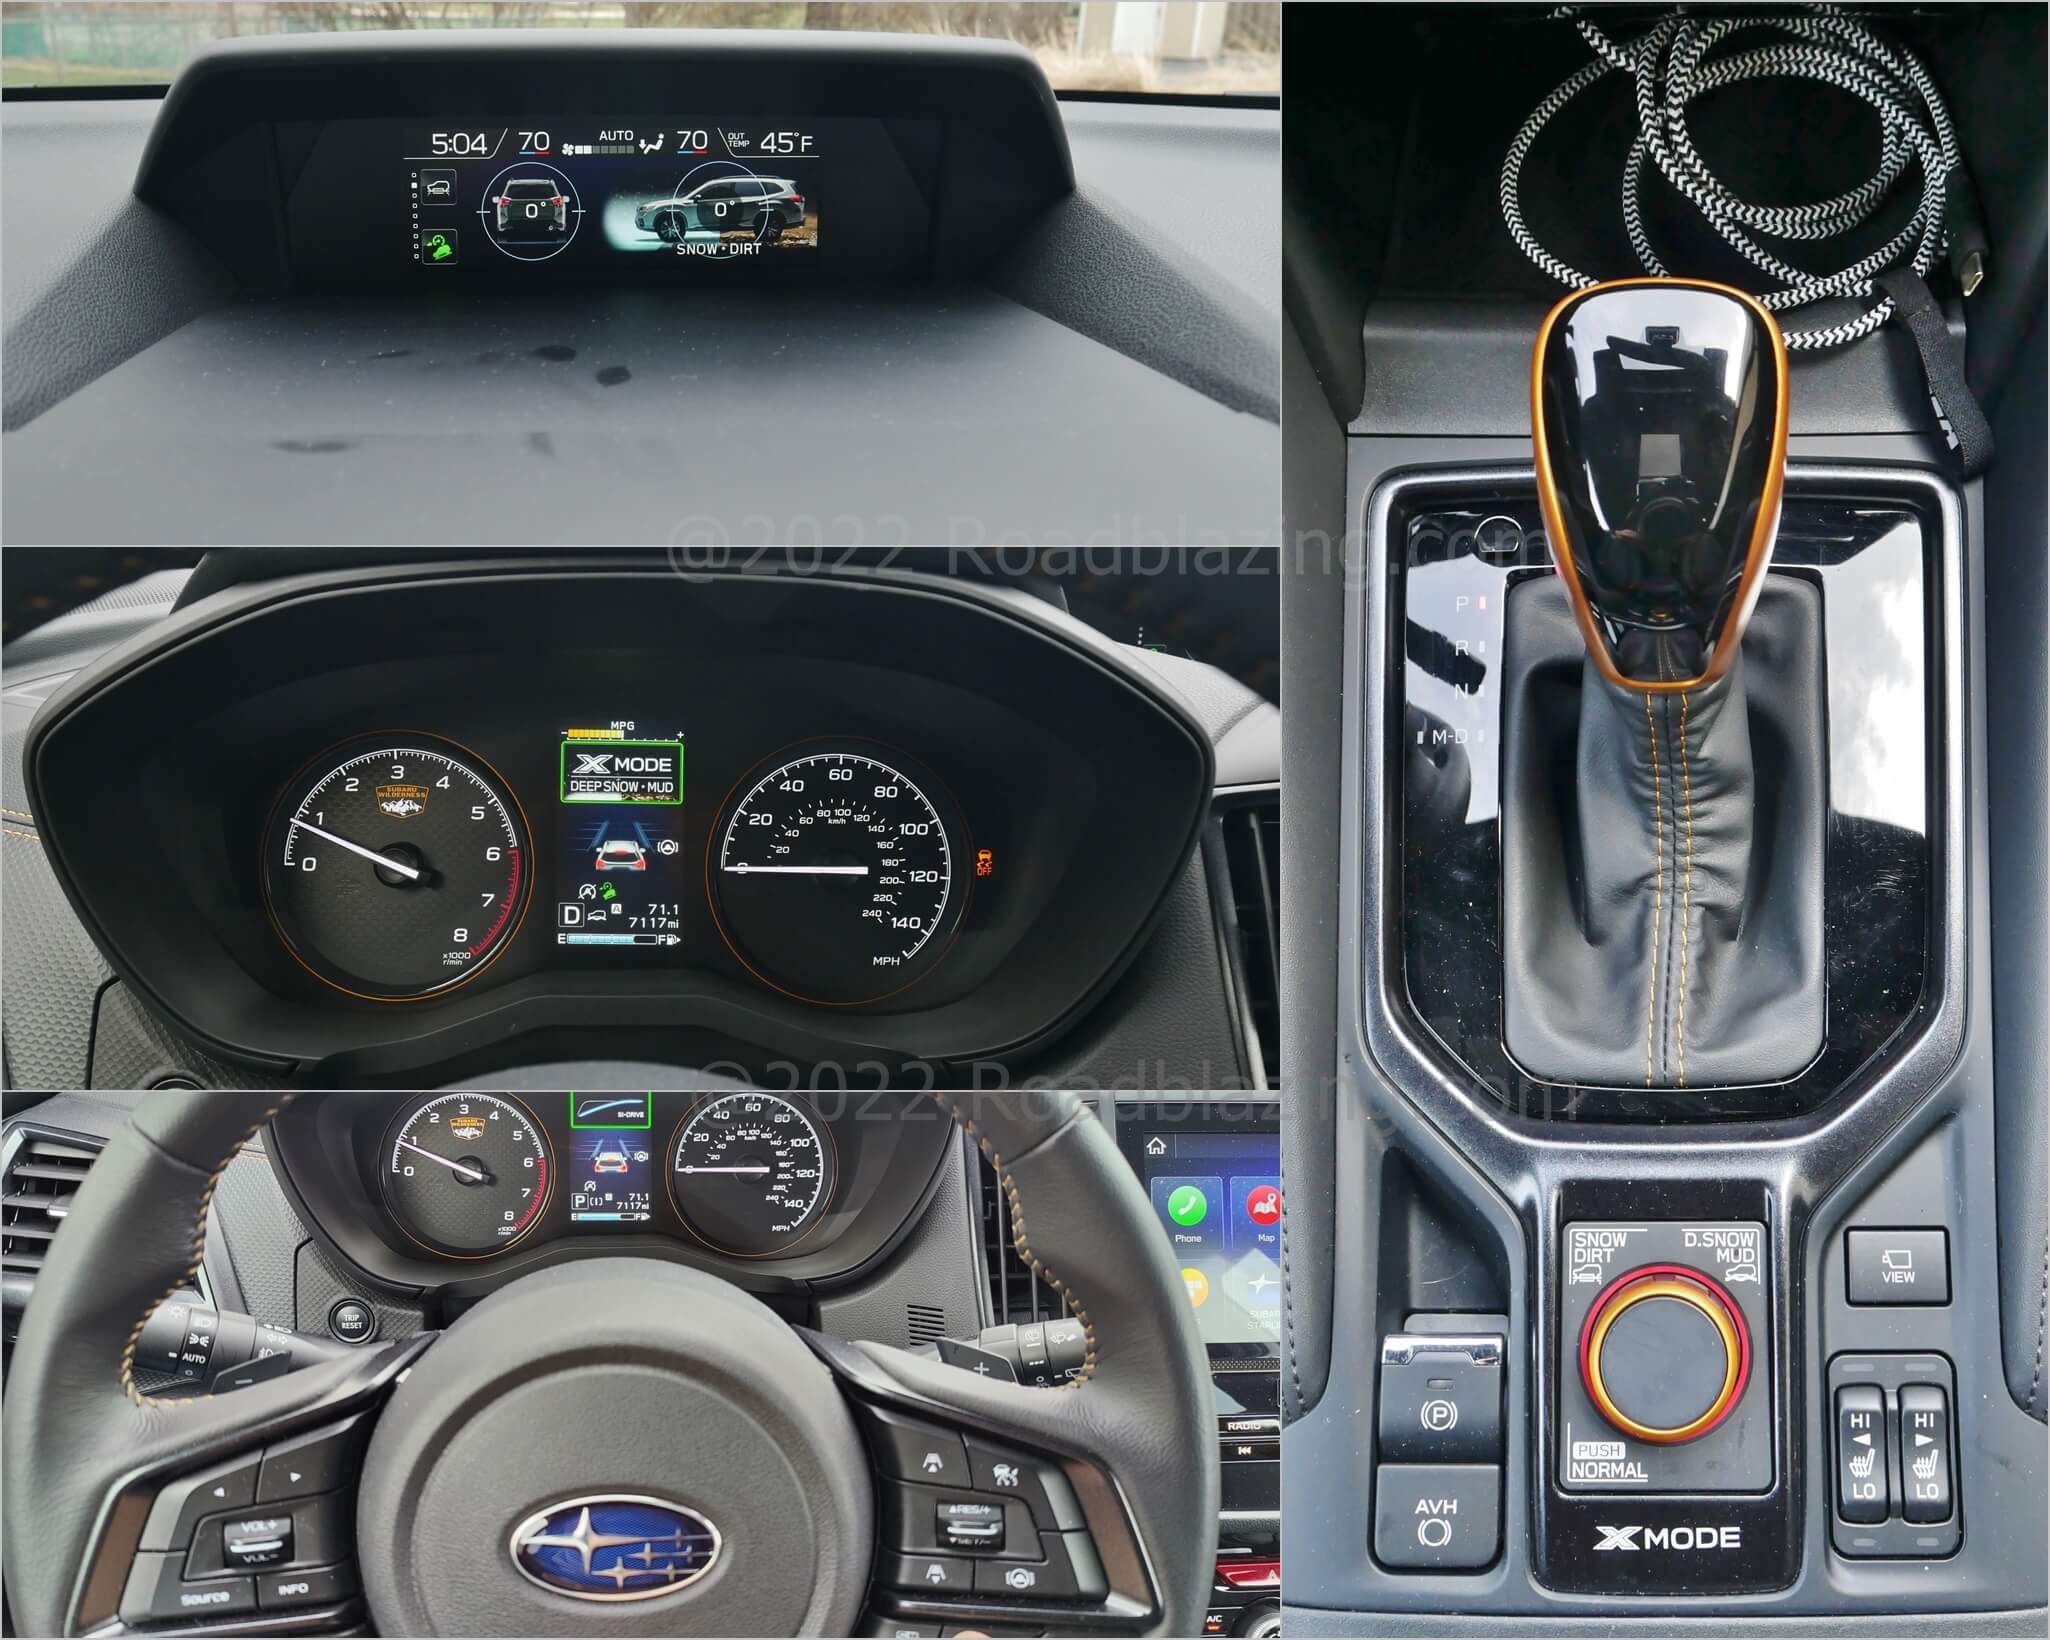 2022 Subaru Forester 2.5L Wilderness AWD: off road X-Mode accessible via twist center console knob